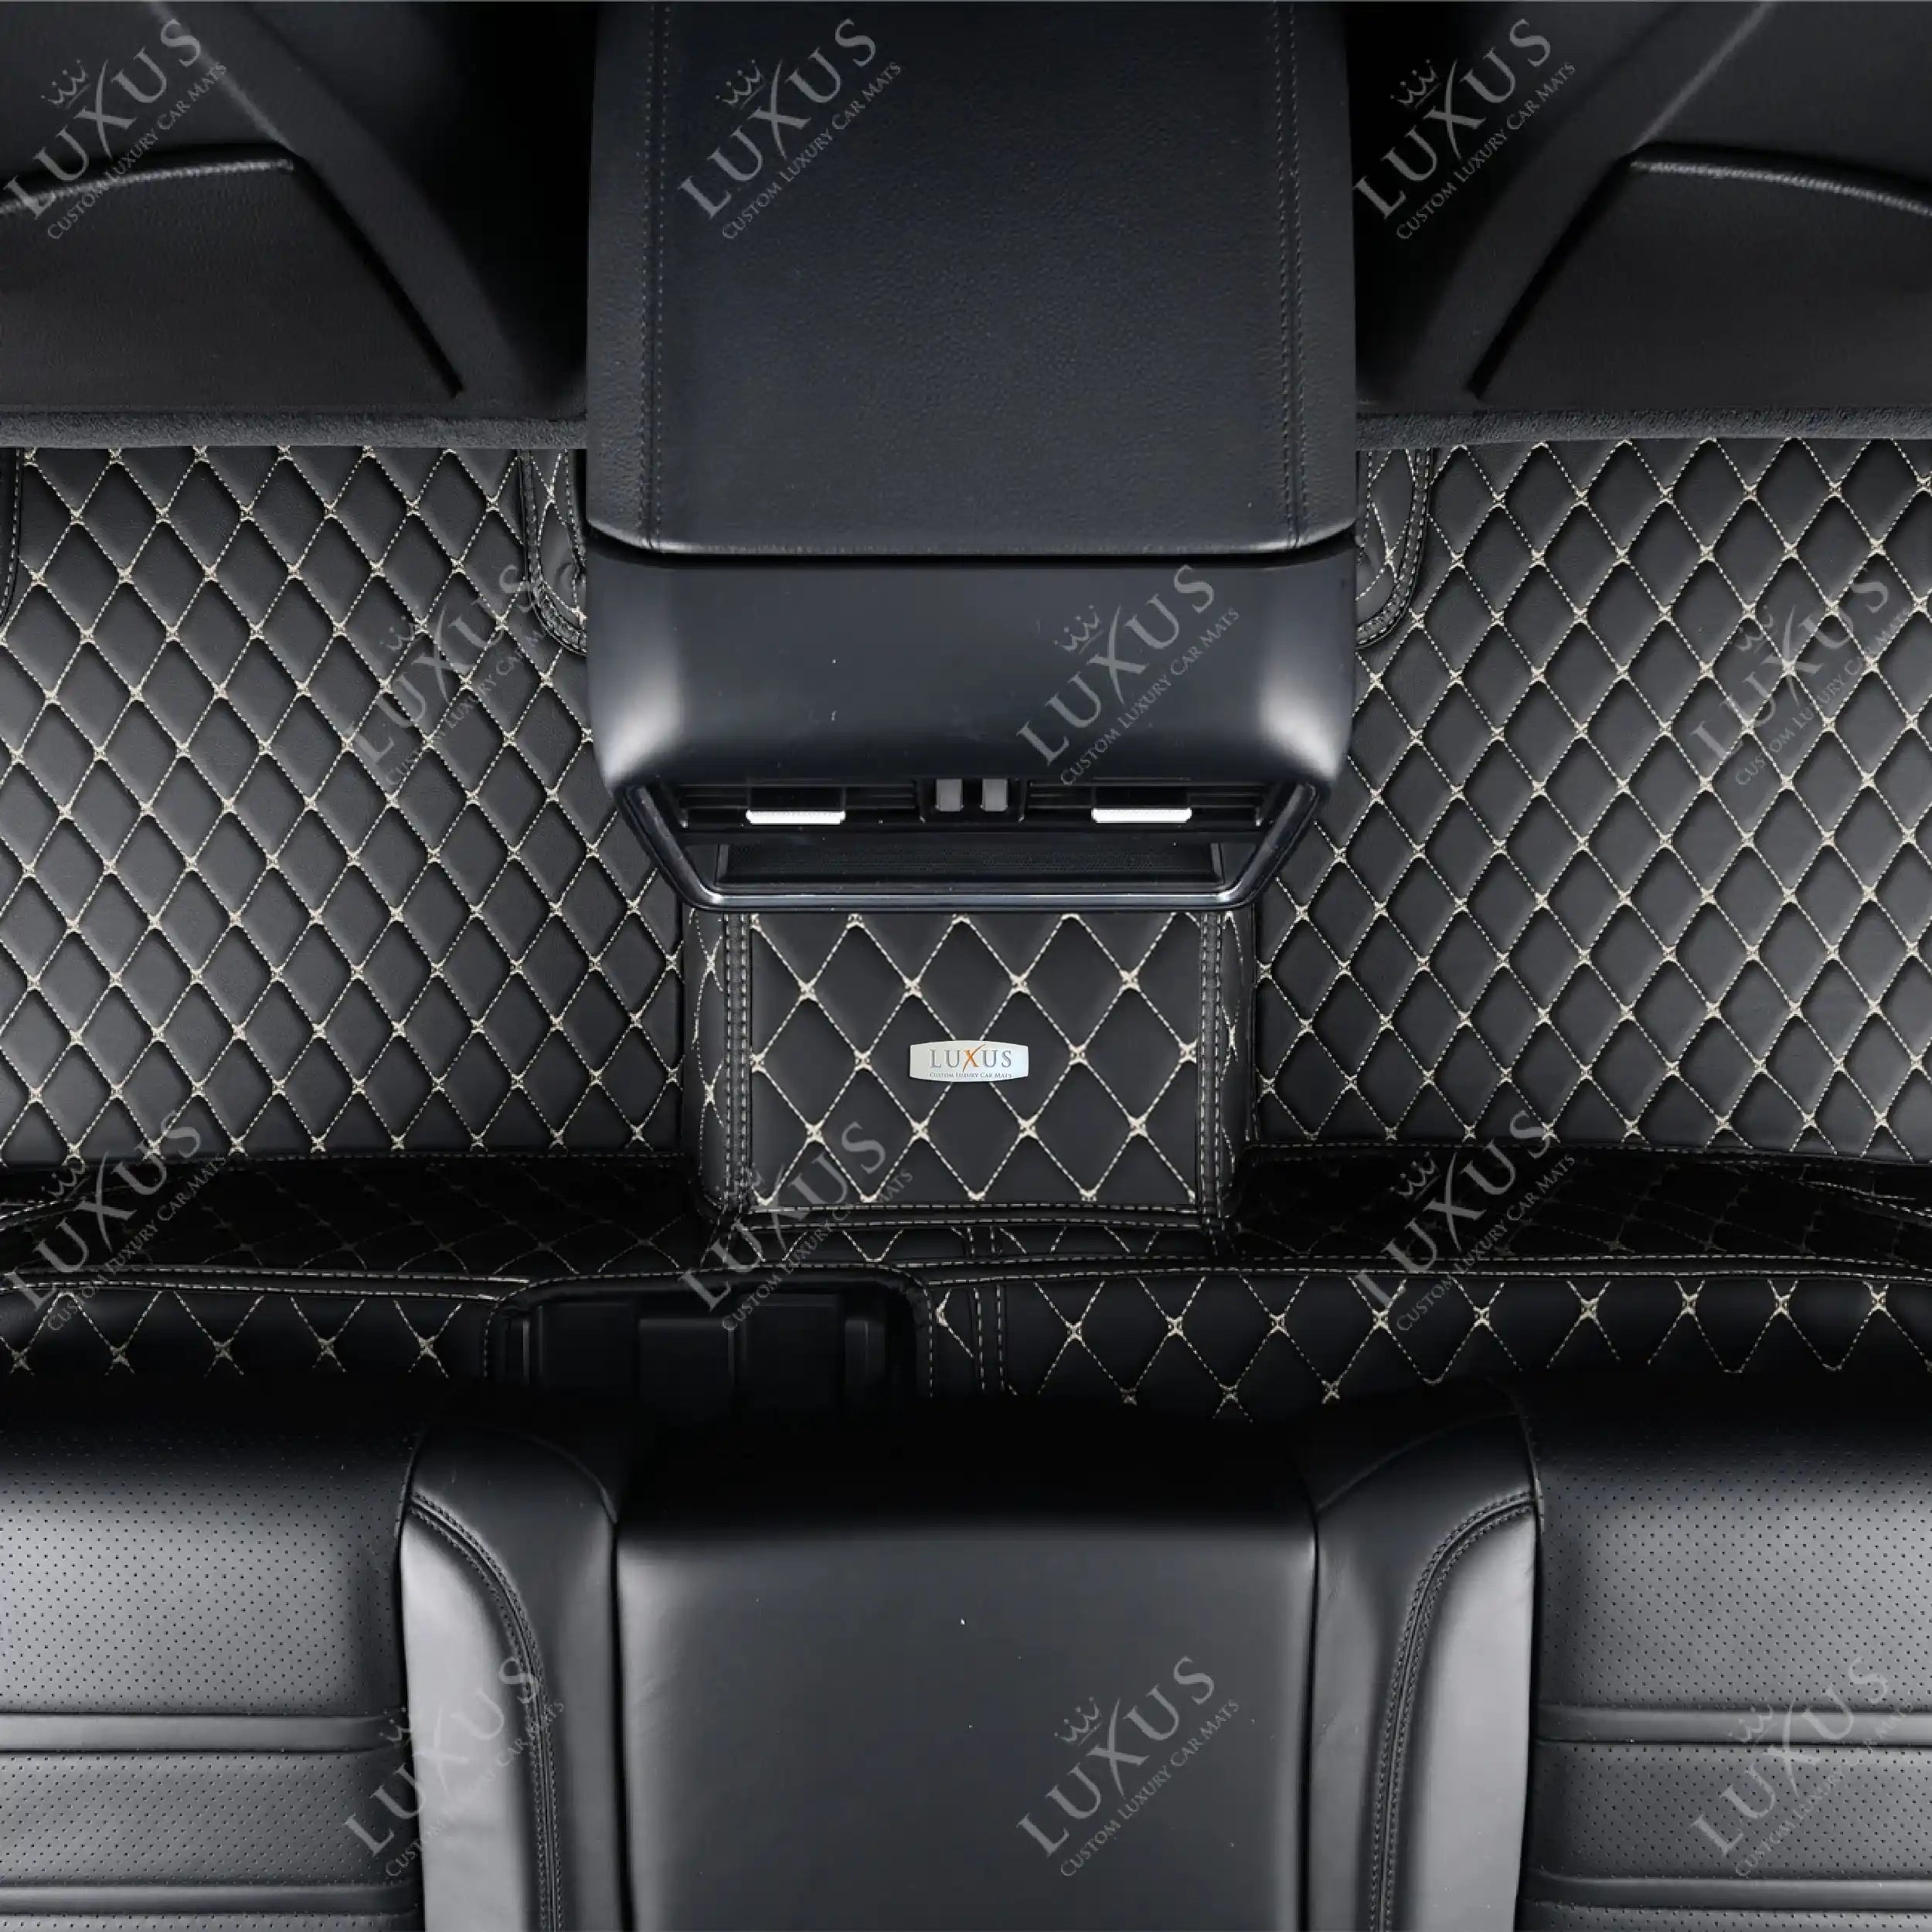 Diamond Stitching Custom Luxury Car Mats Set